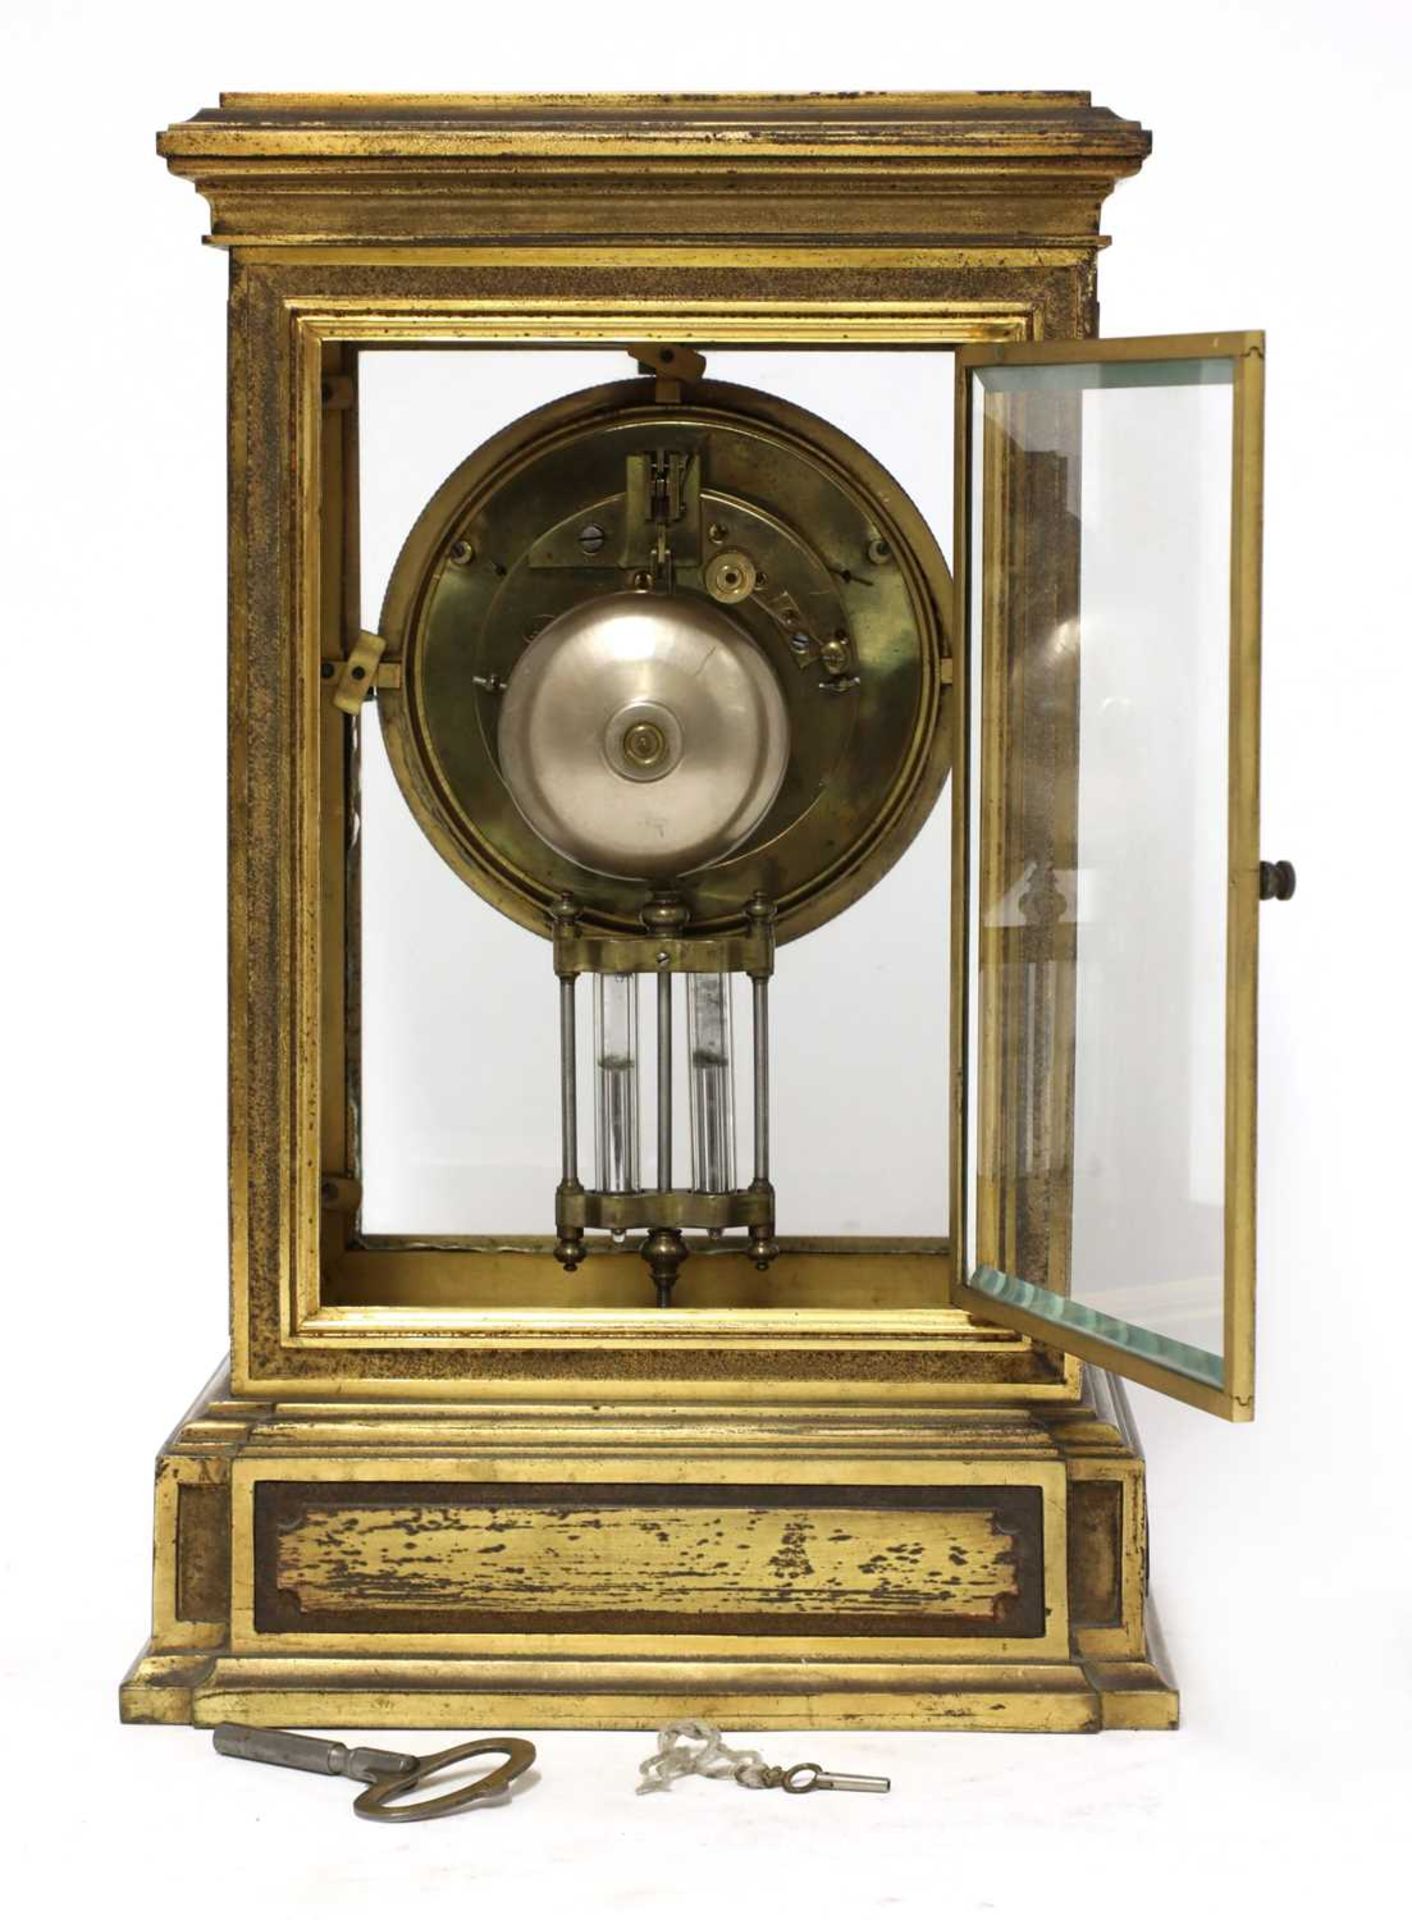 A French ormolu mantel clock, - Image 3 of 3